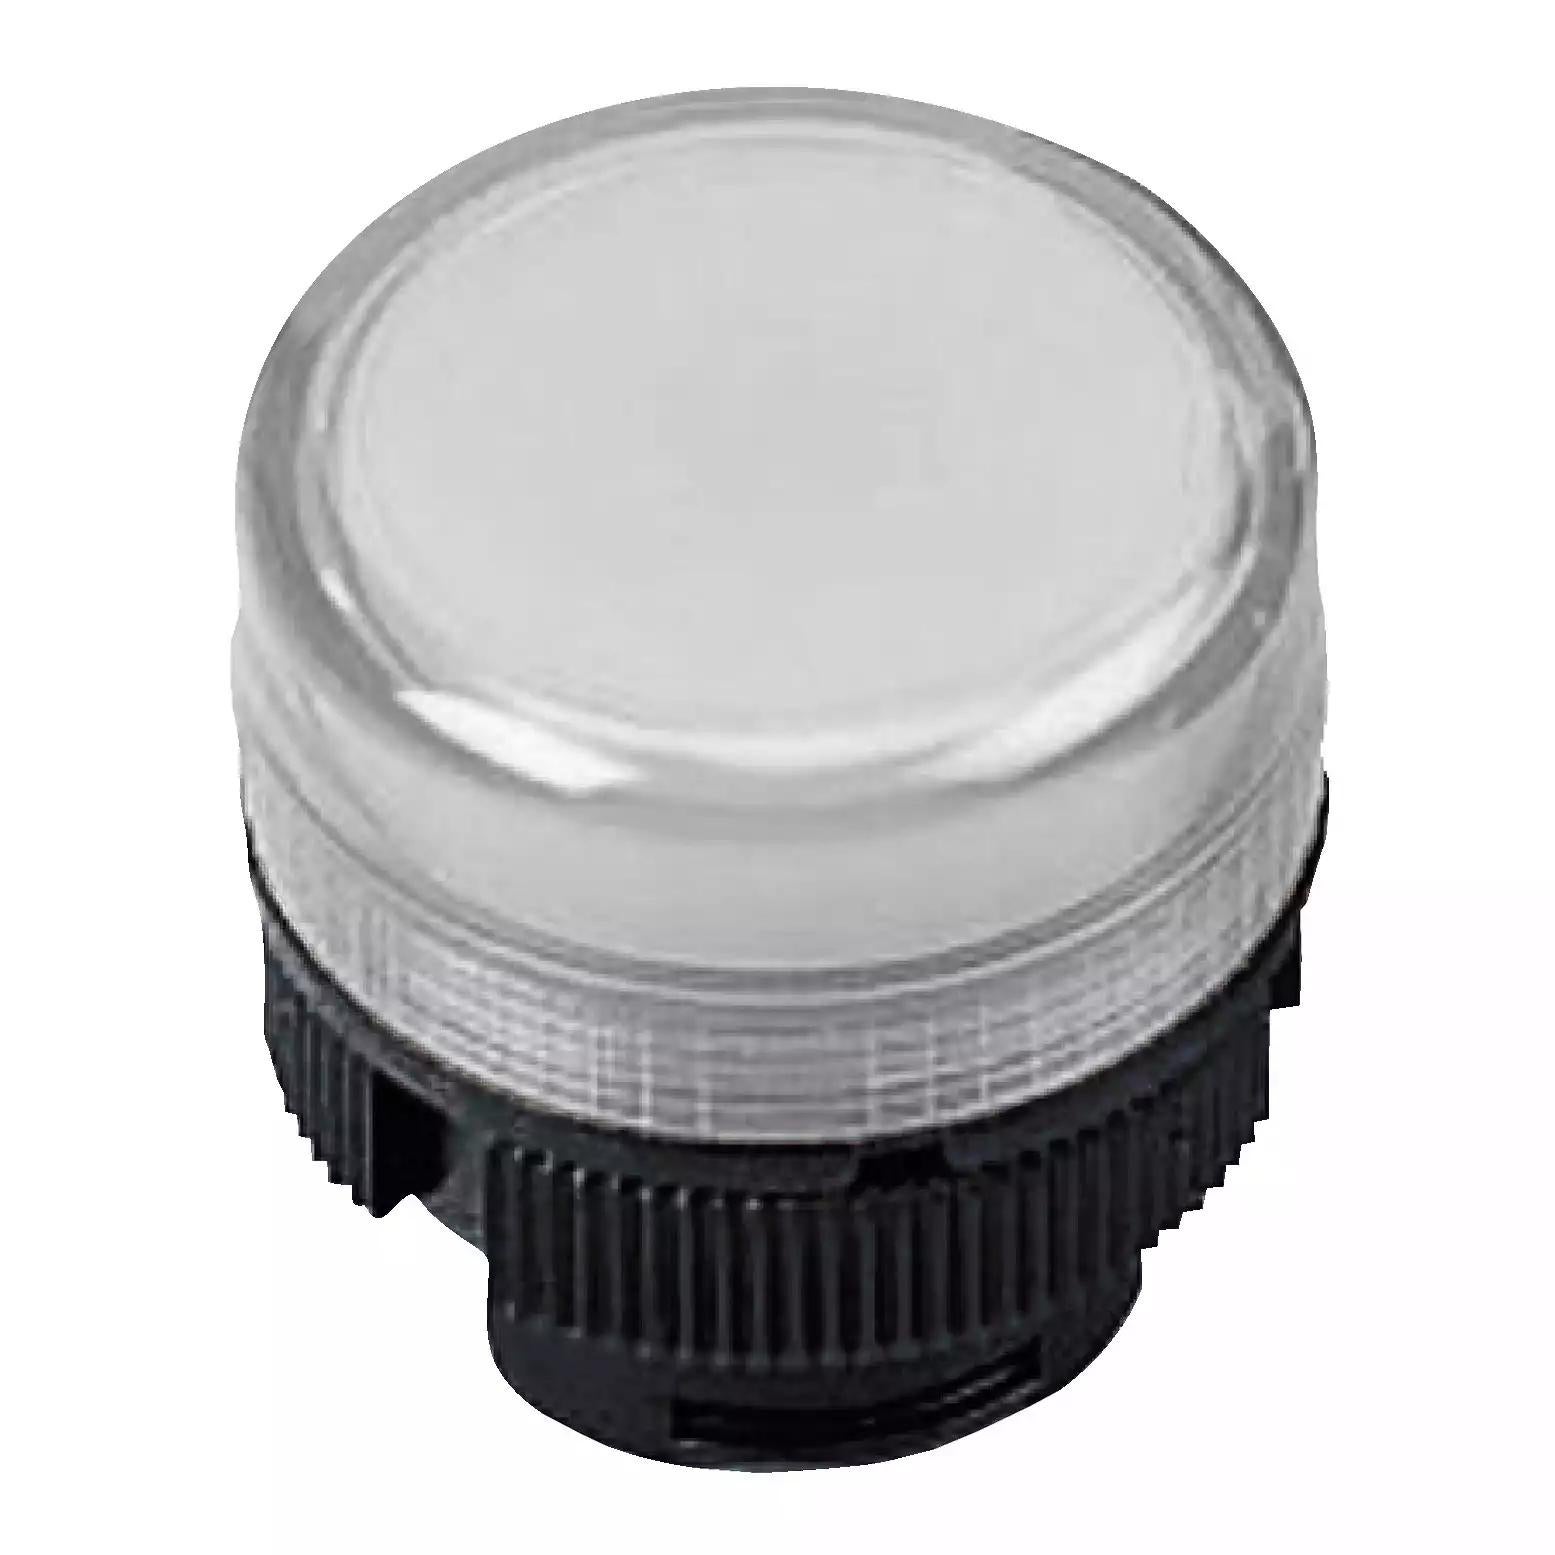 Head for pilot light, Harmony XAC, for incandescent bulb, plastic, white cap, 22mm